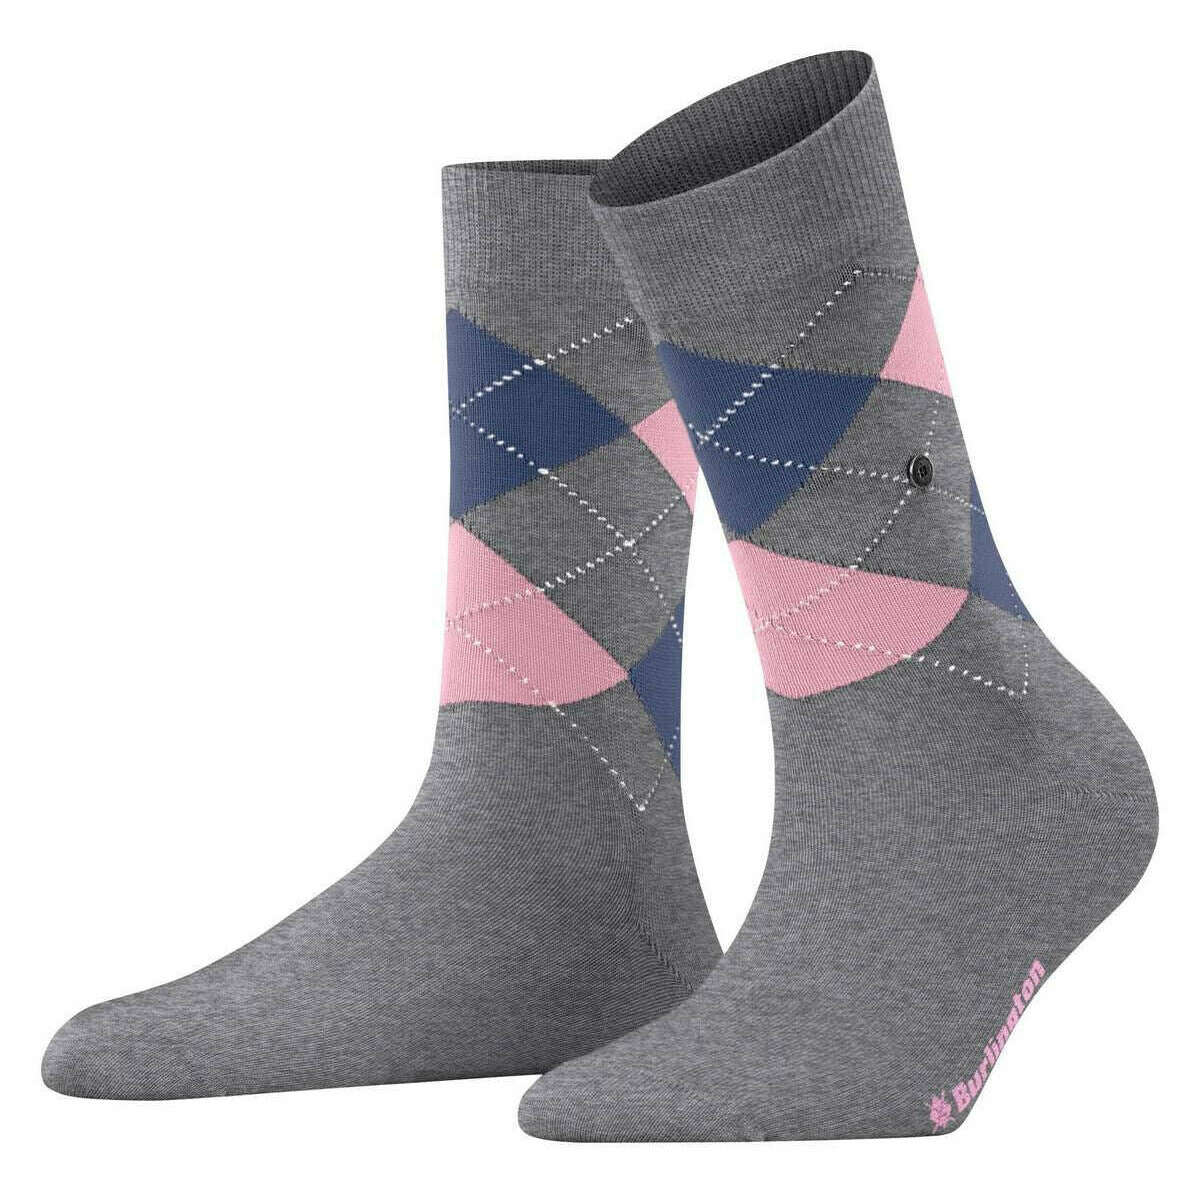 Burlington Covent Garden Socks - Concrete Grey/Pink